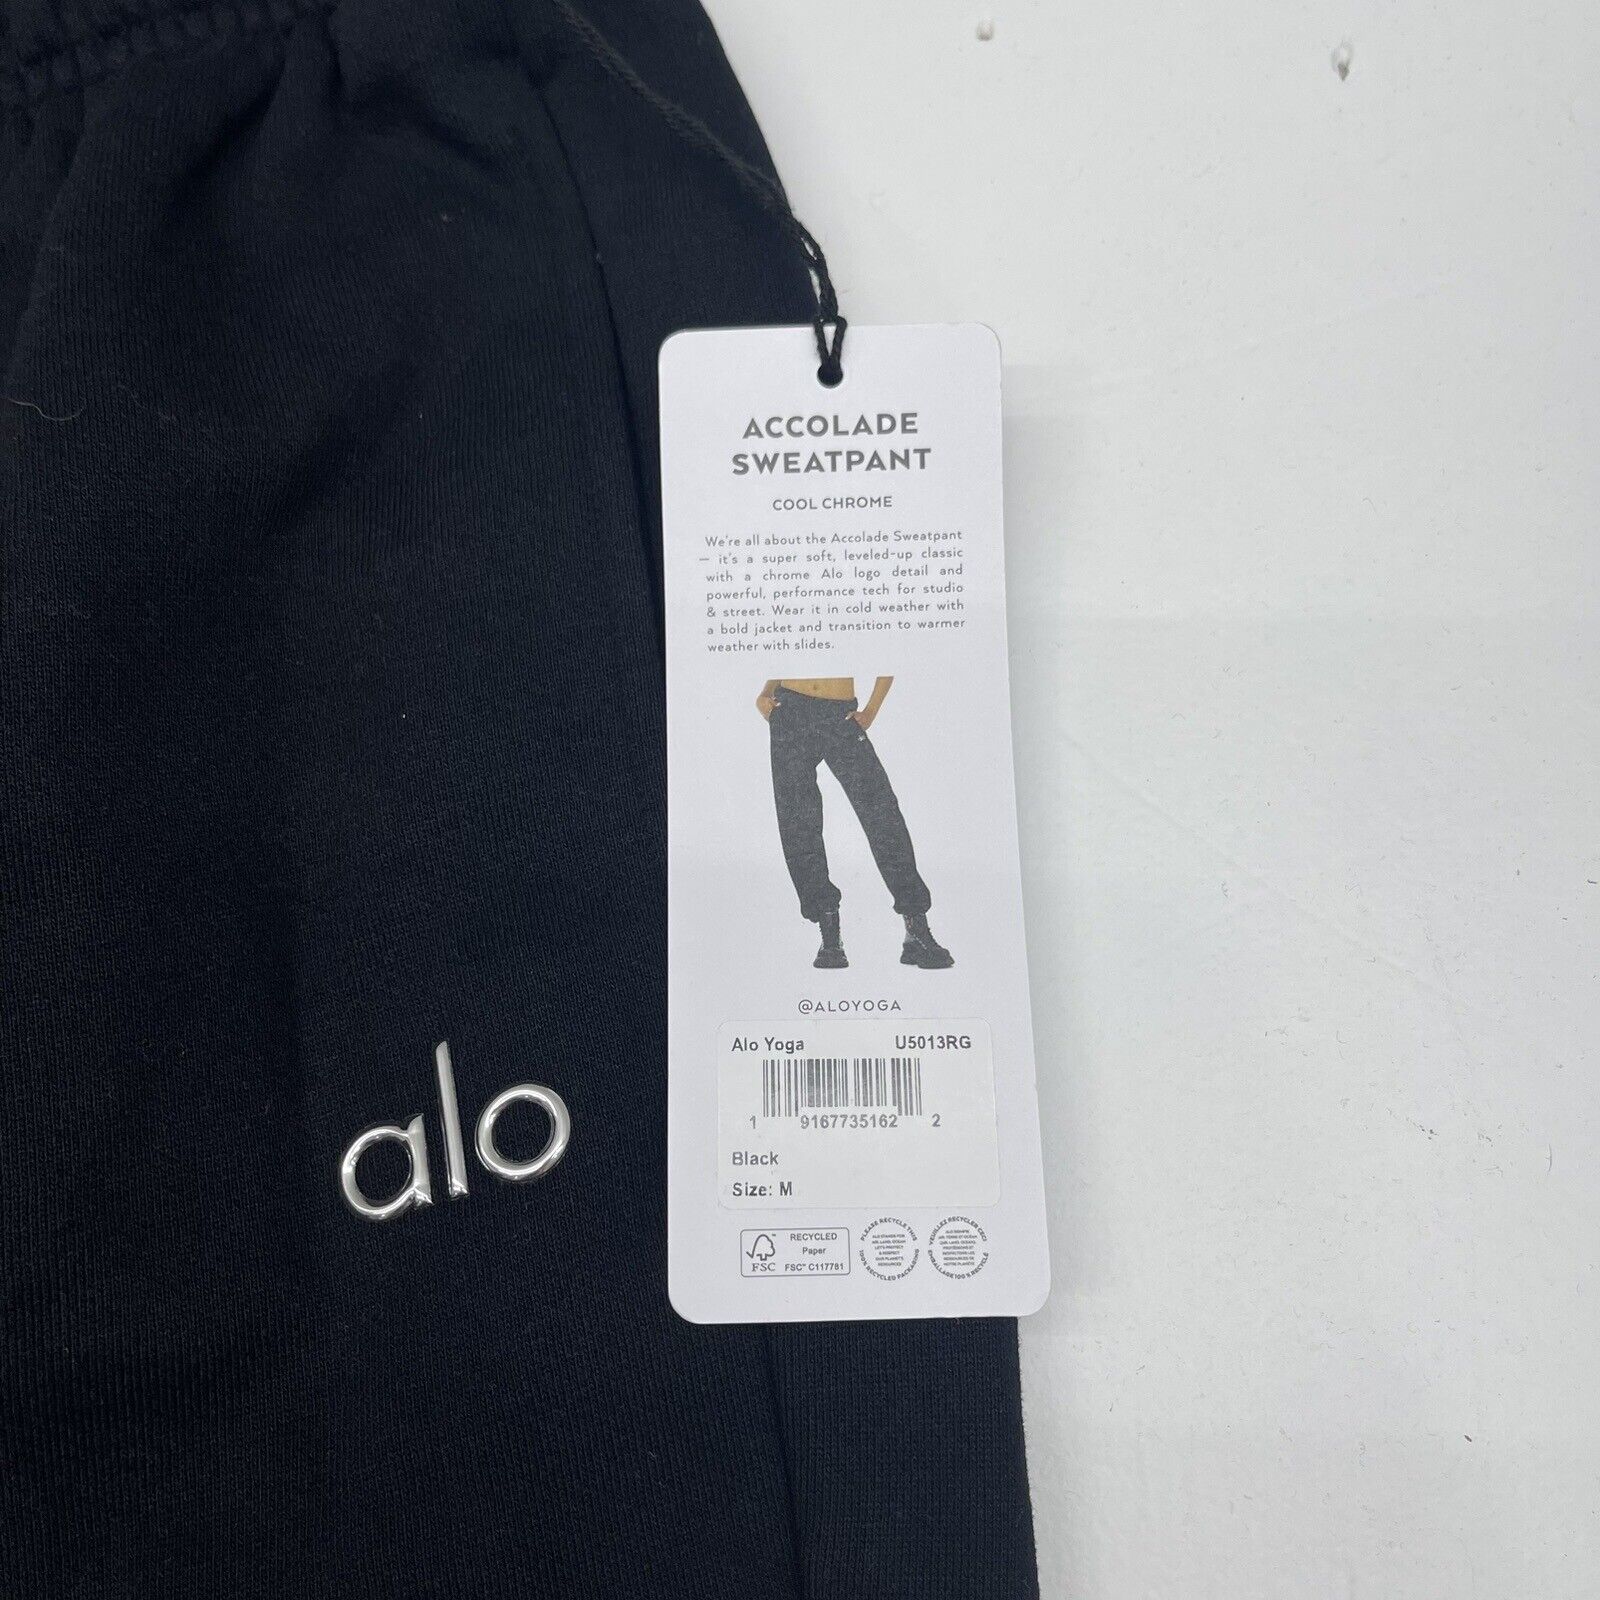 Alo Accolade Sweatpants Black Women's Size Medium New $118 - beyond exchange